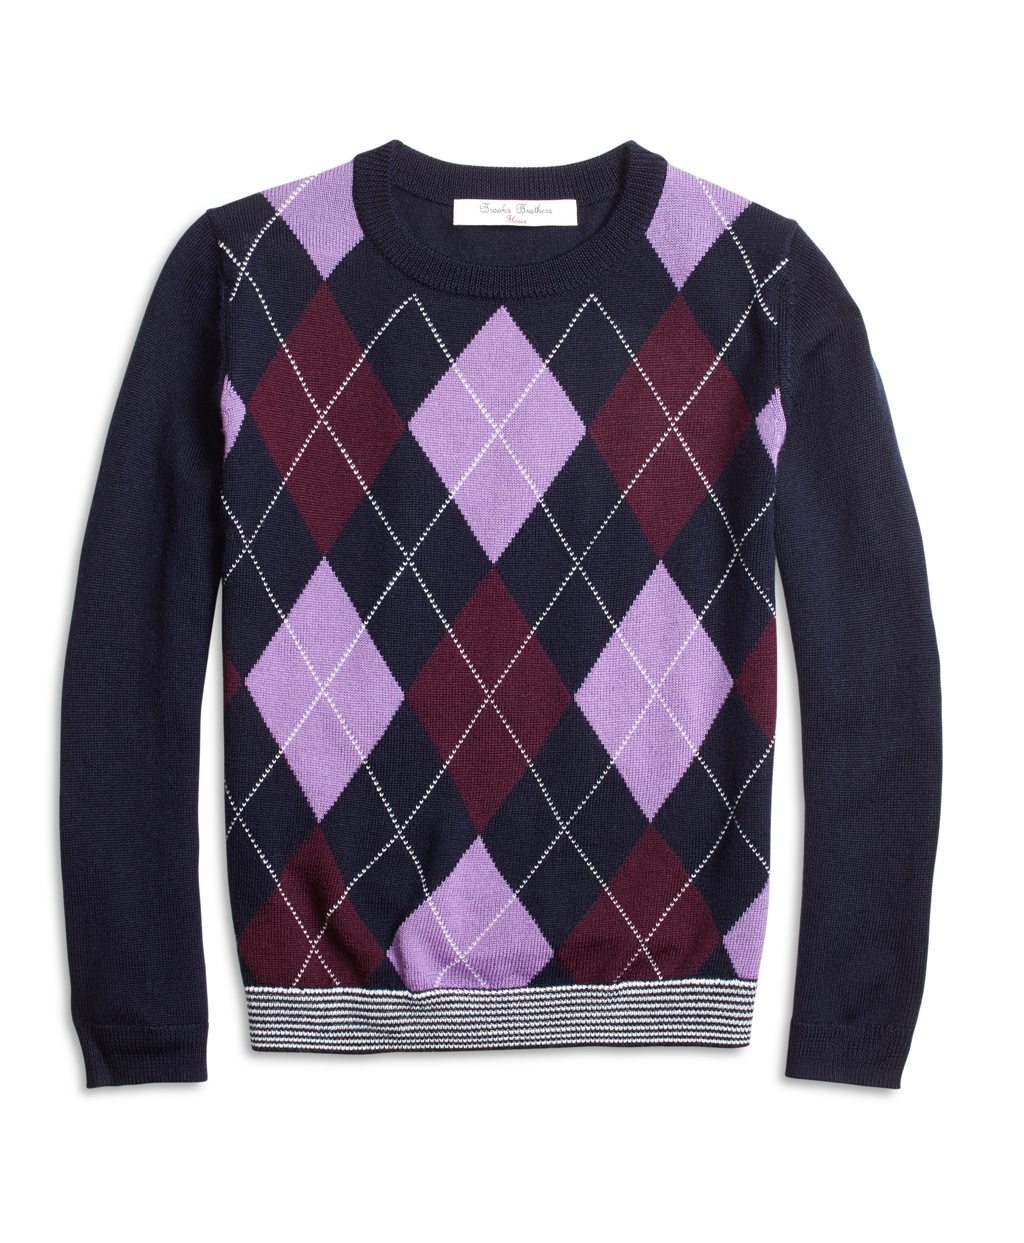 Brooks Brothers Merino Wool Blend Argyle Sweater